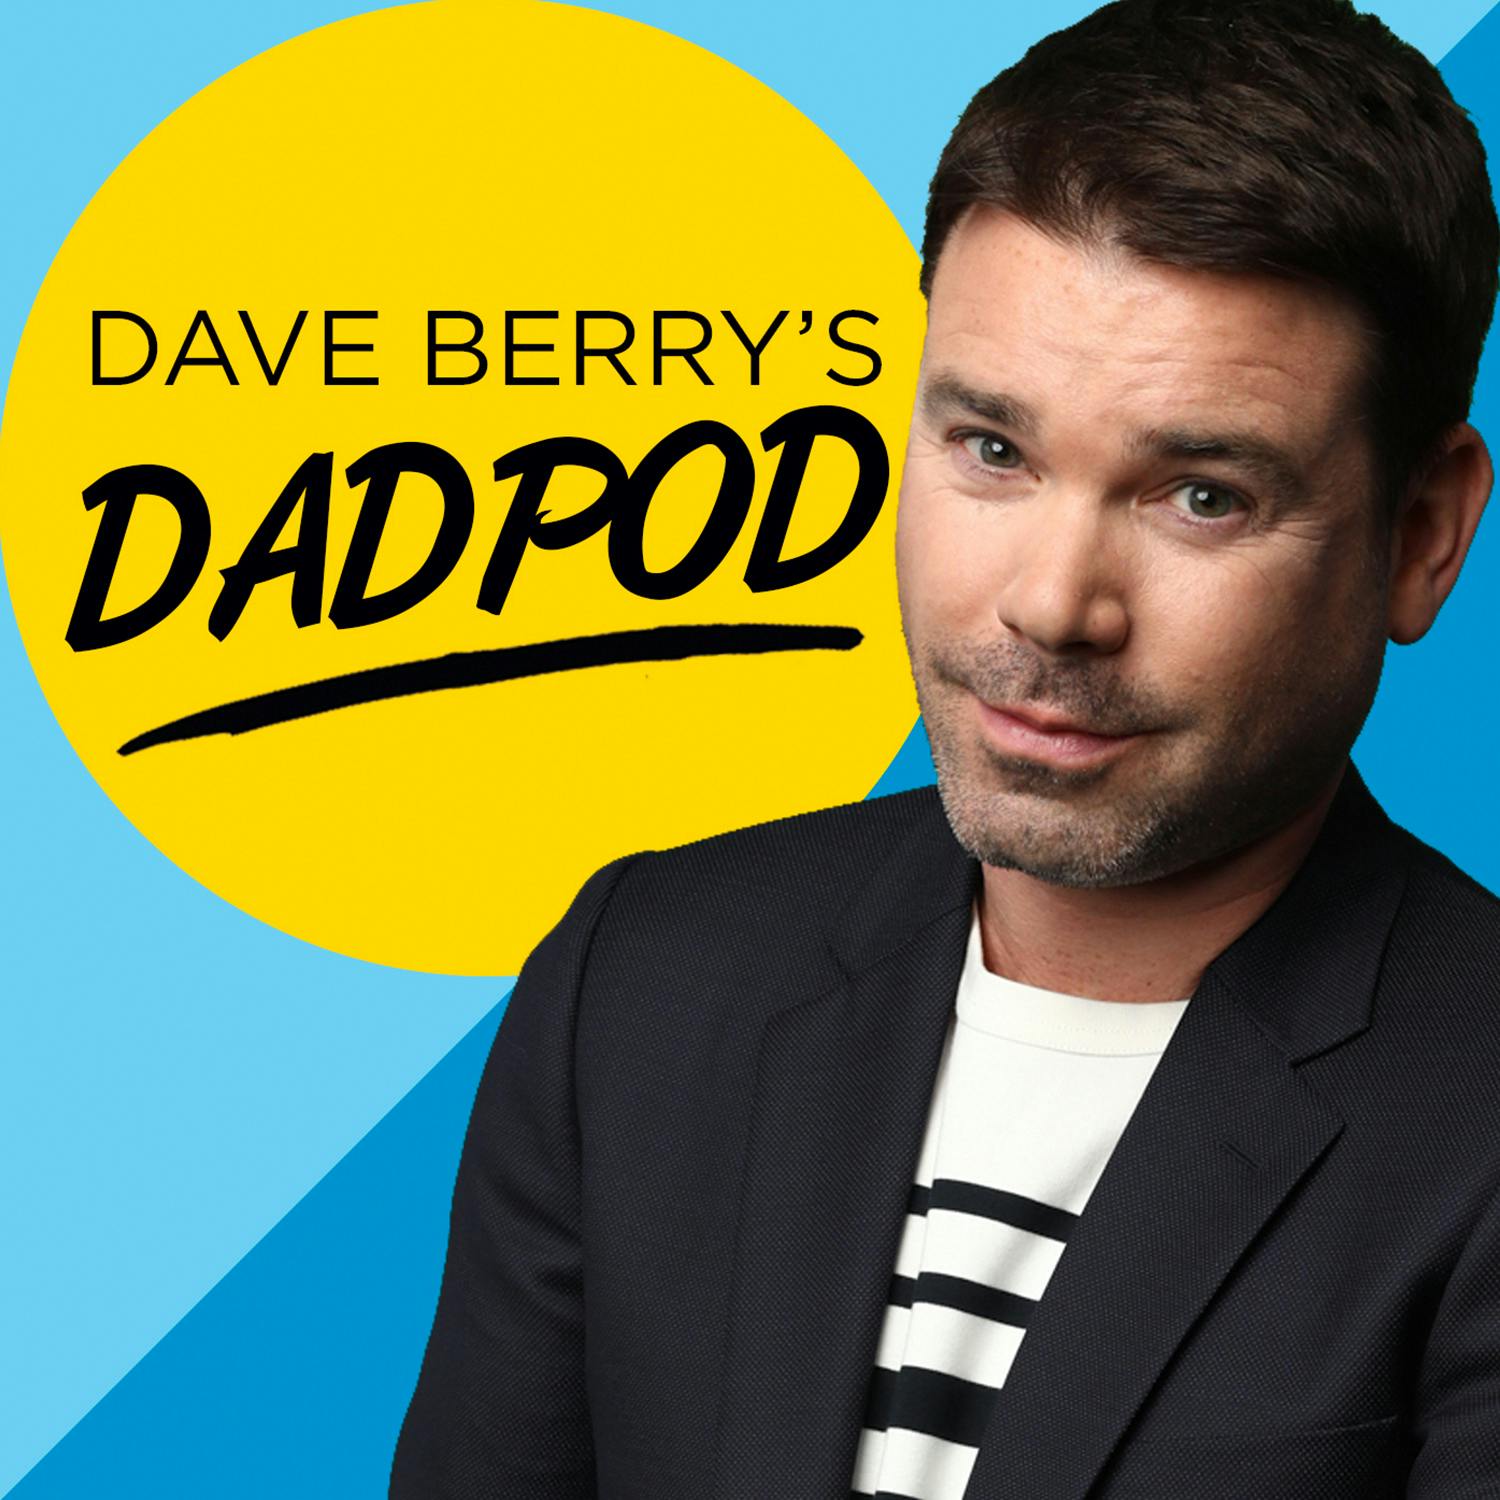 Dave Berry's Dadpod - Griff Rhys Jones